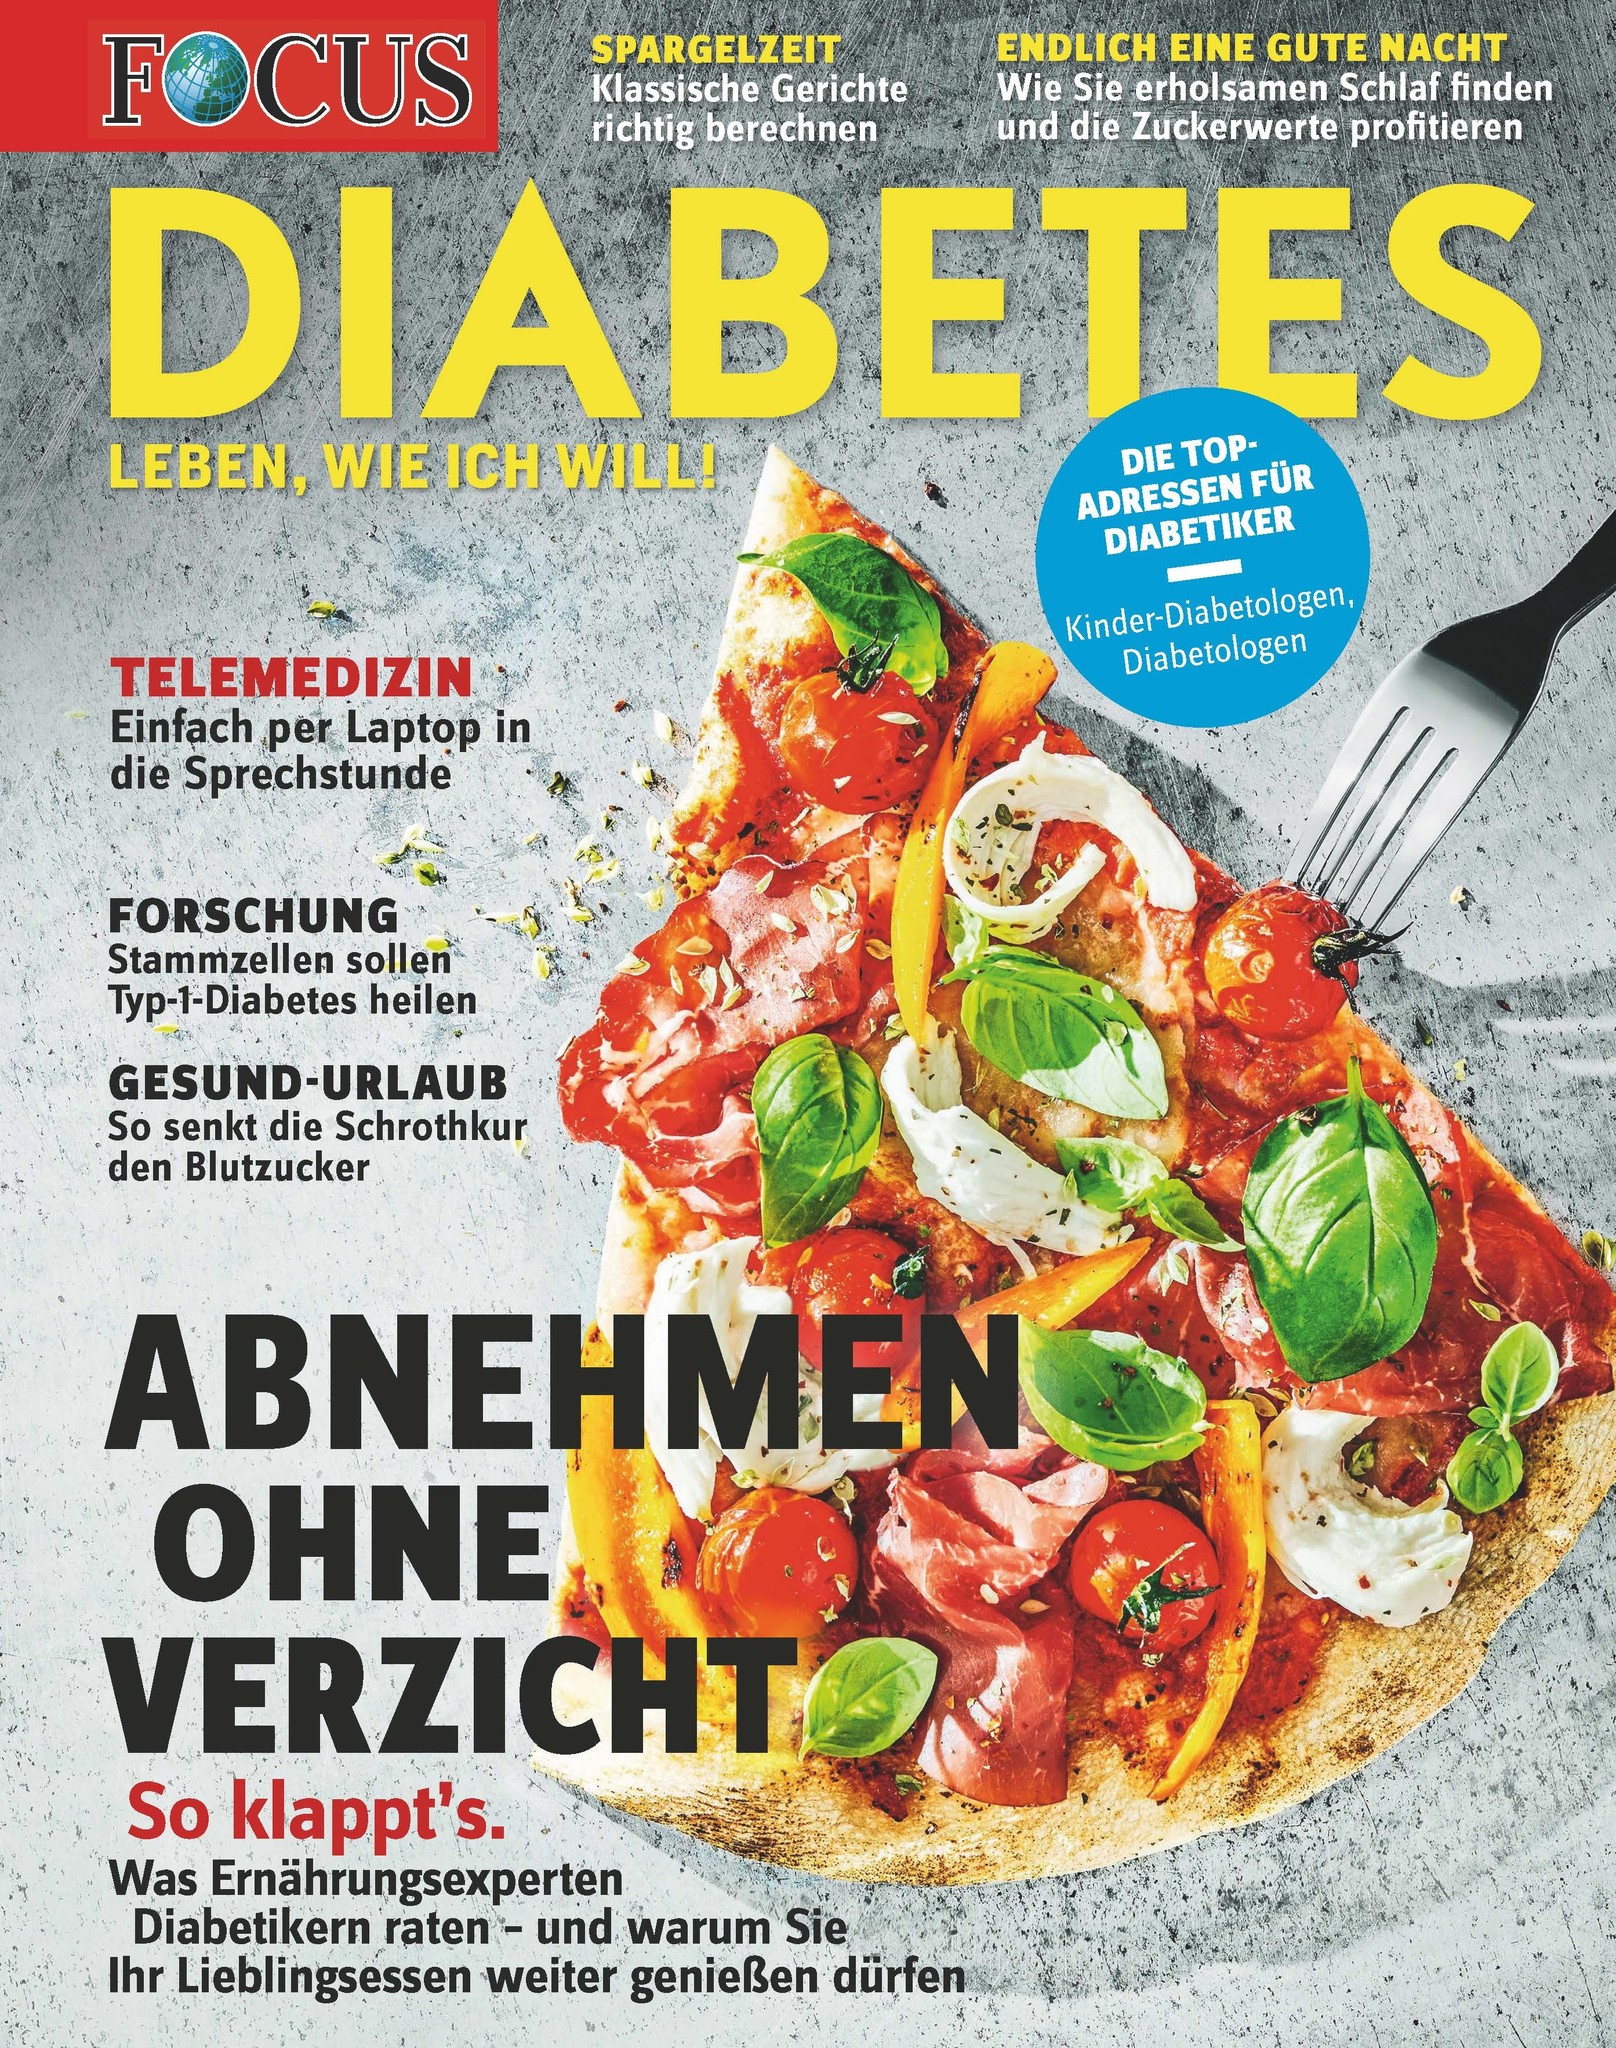 FOCUS-DIABETES FOCUS Diabetes - Leben, wie ich will. Mit FOCUS-DIABETES.